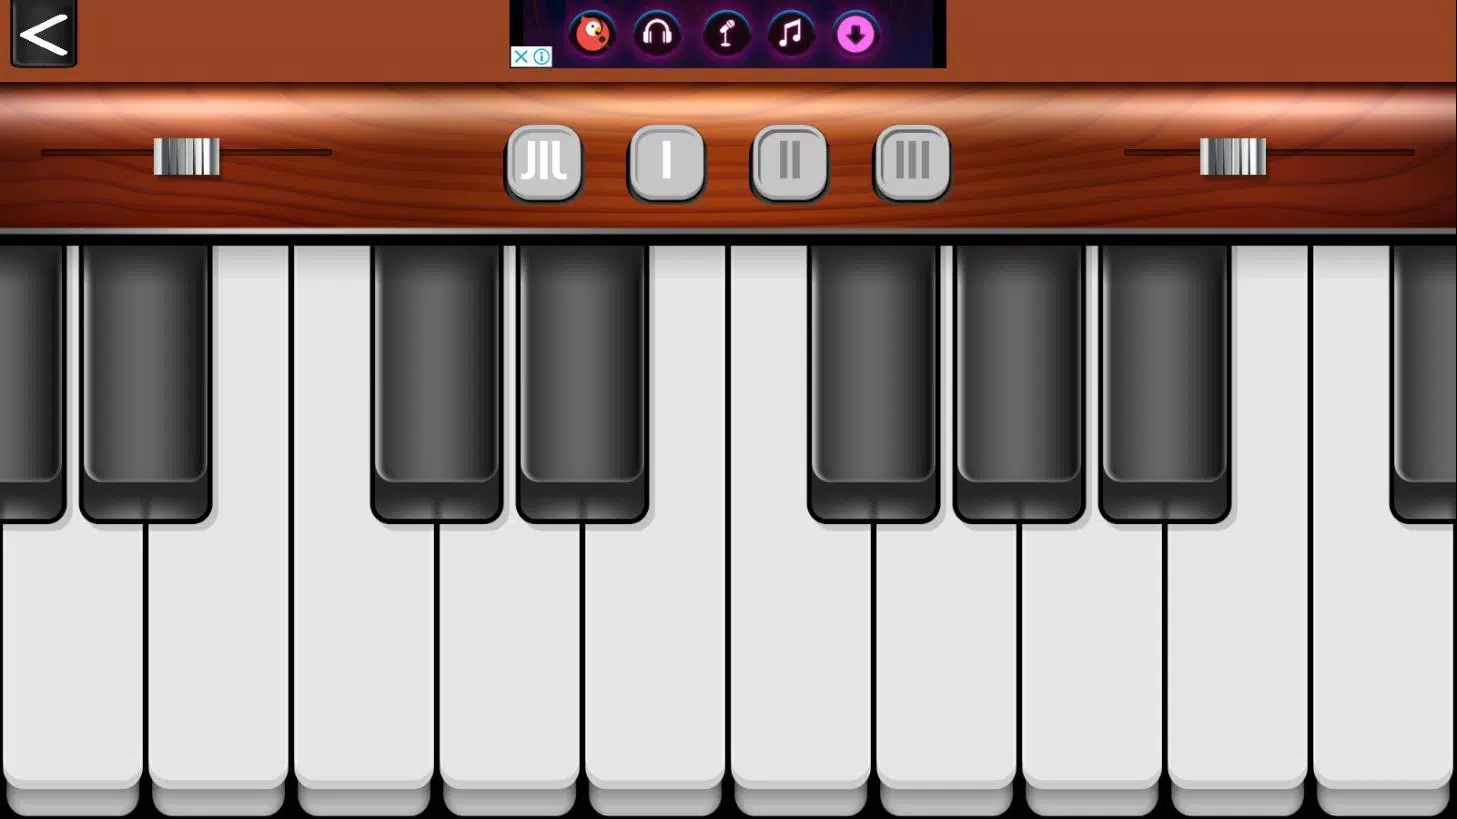 My Piano Phone APK v12.2 Free Download - APK4Fun